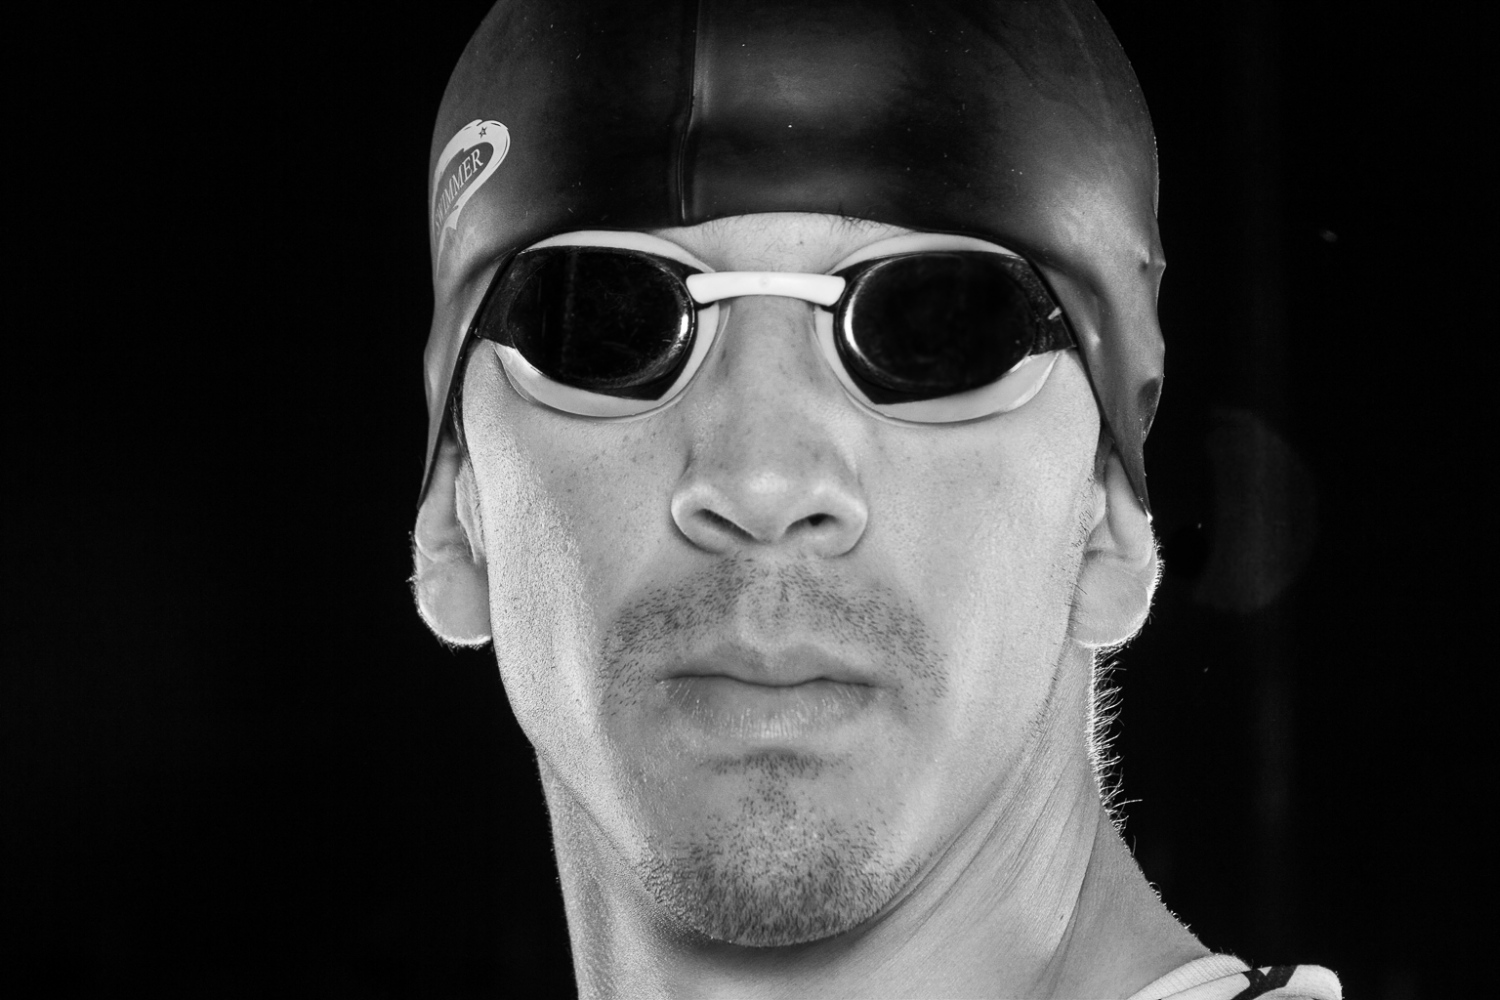 From the series - Alto Rendimiento -Â "NataciÃ³n" Brian Urbano / Blind Swimming Team -ðŸ‡¨ðŸ‡´COLOMBIA.